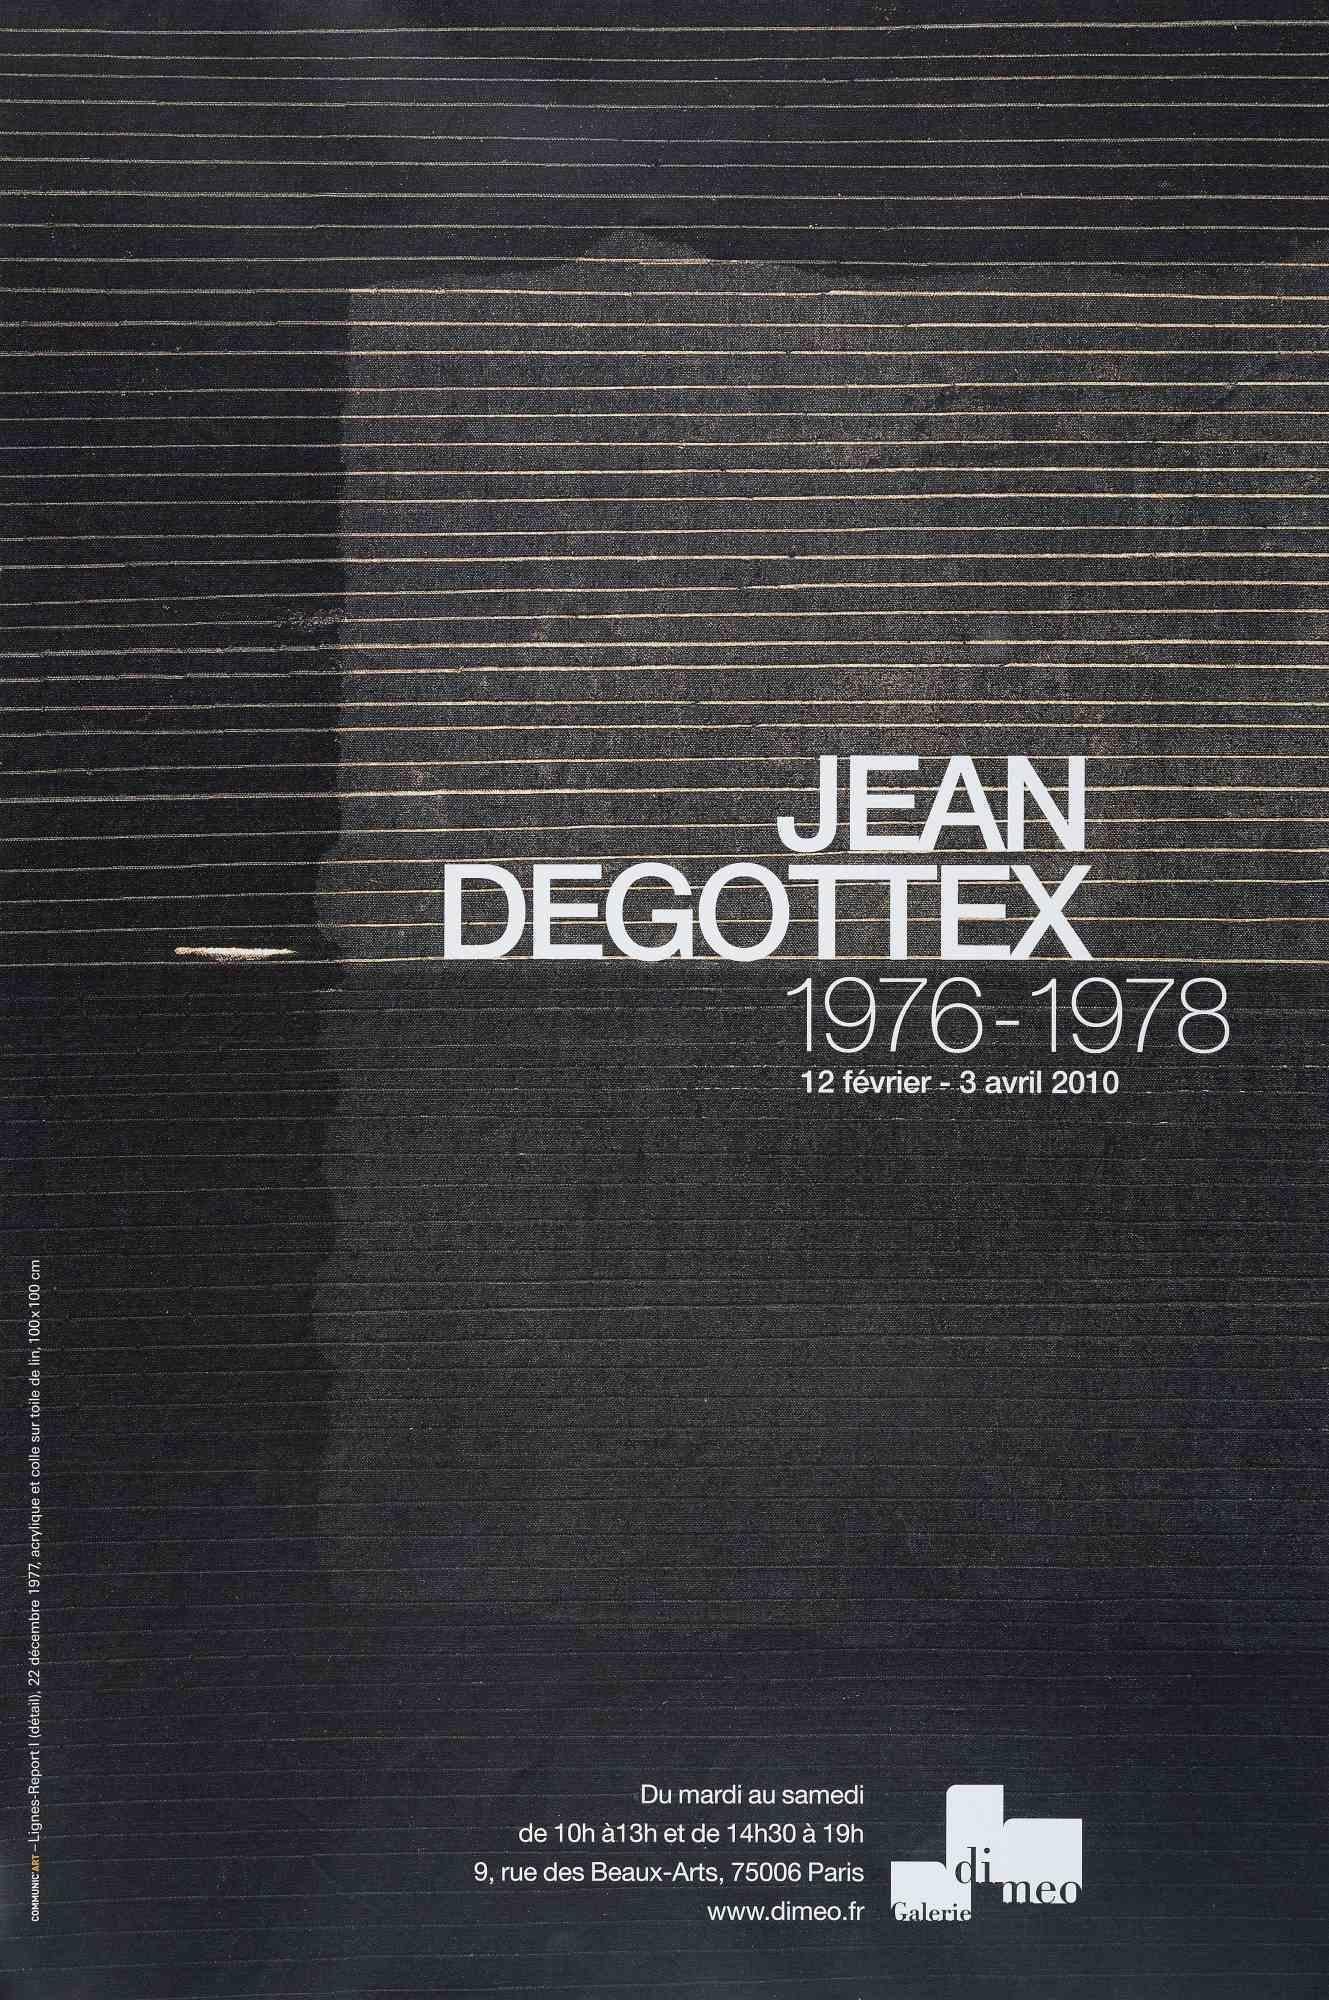 Jean Degottex - Vintage Poster Exhibition - 2010